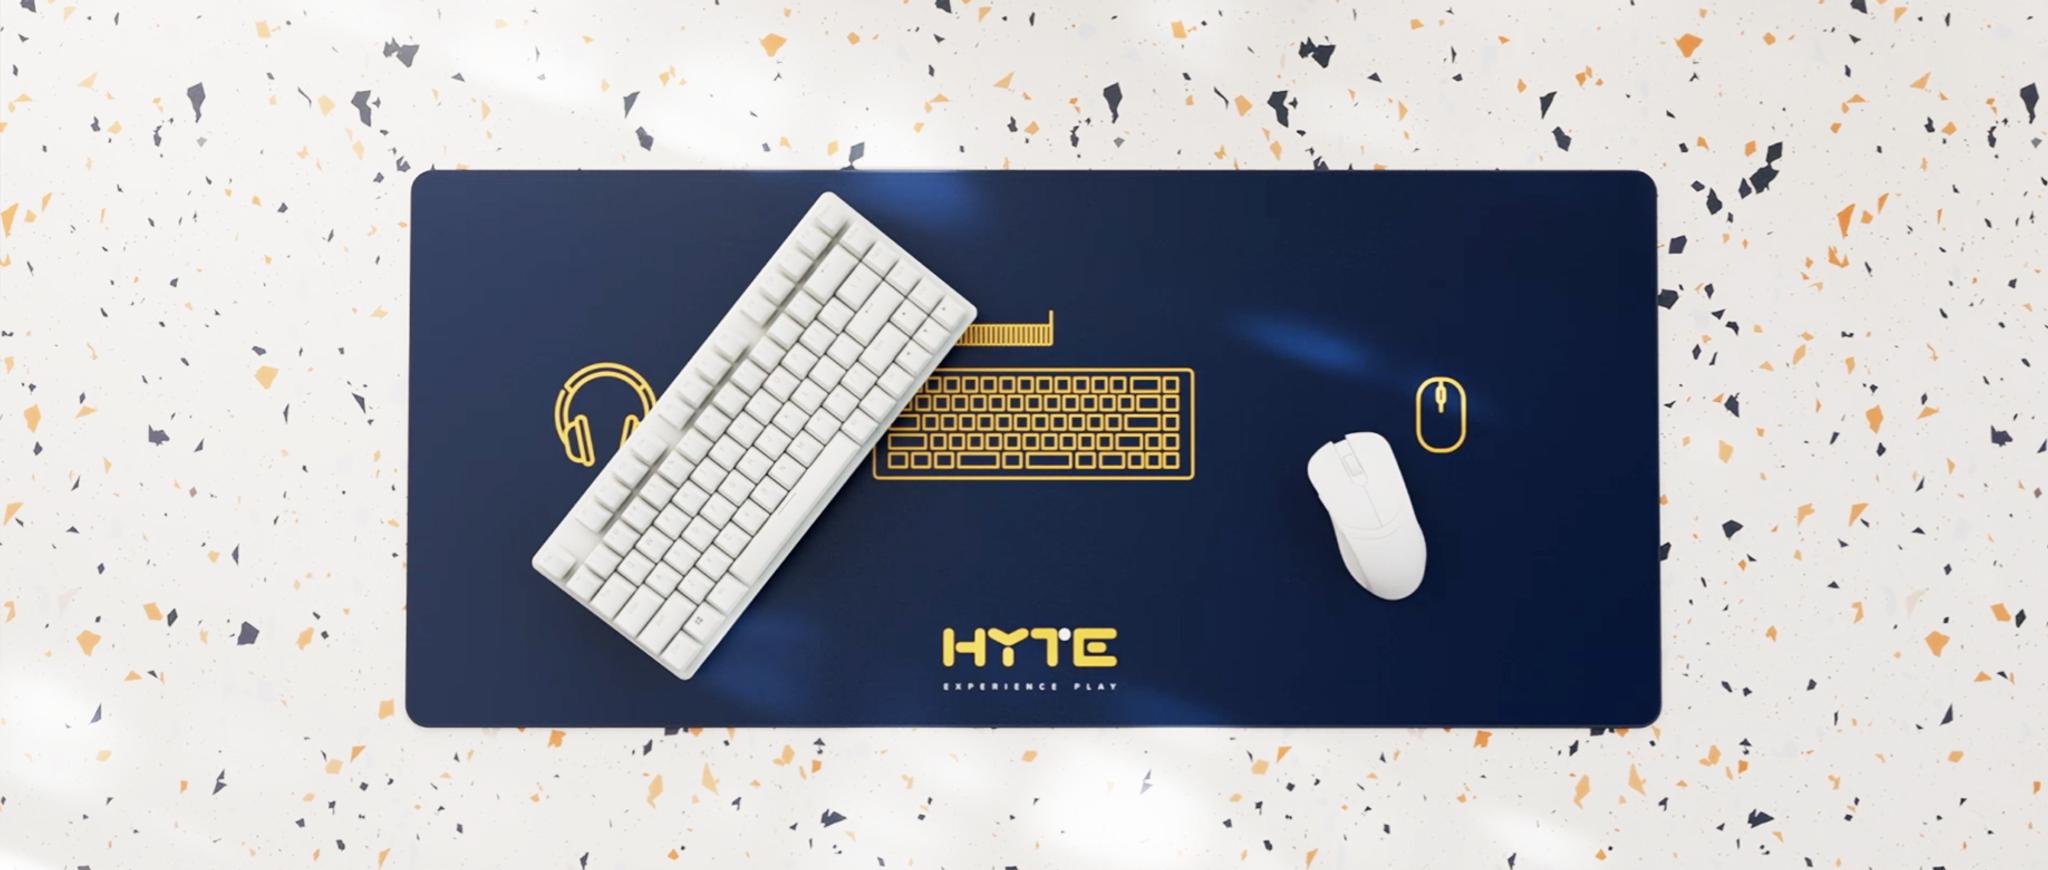 HYTE Desk Pad DP900 